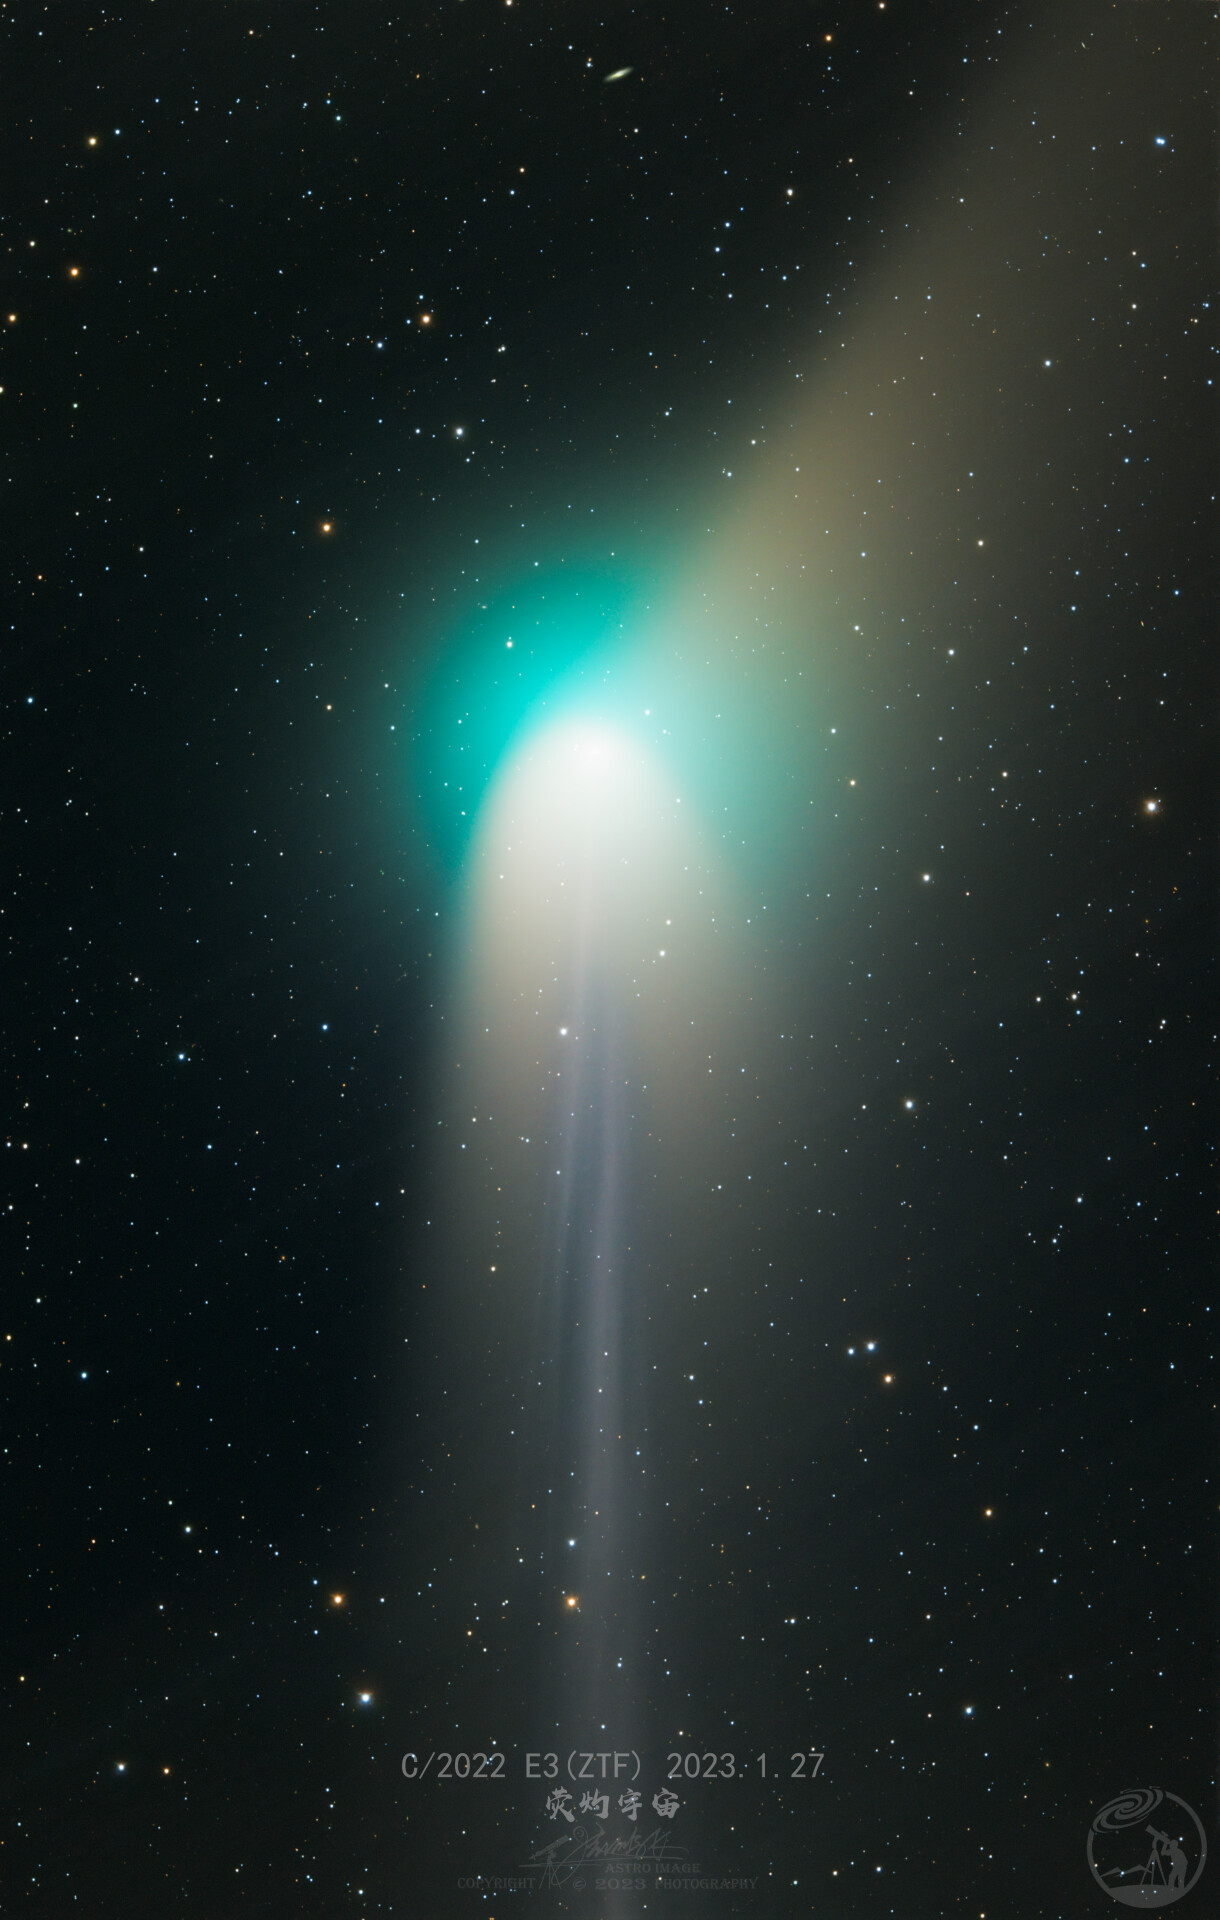 C/2022 E3(ZTF)彗星1.27